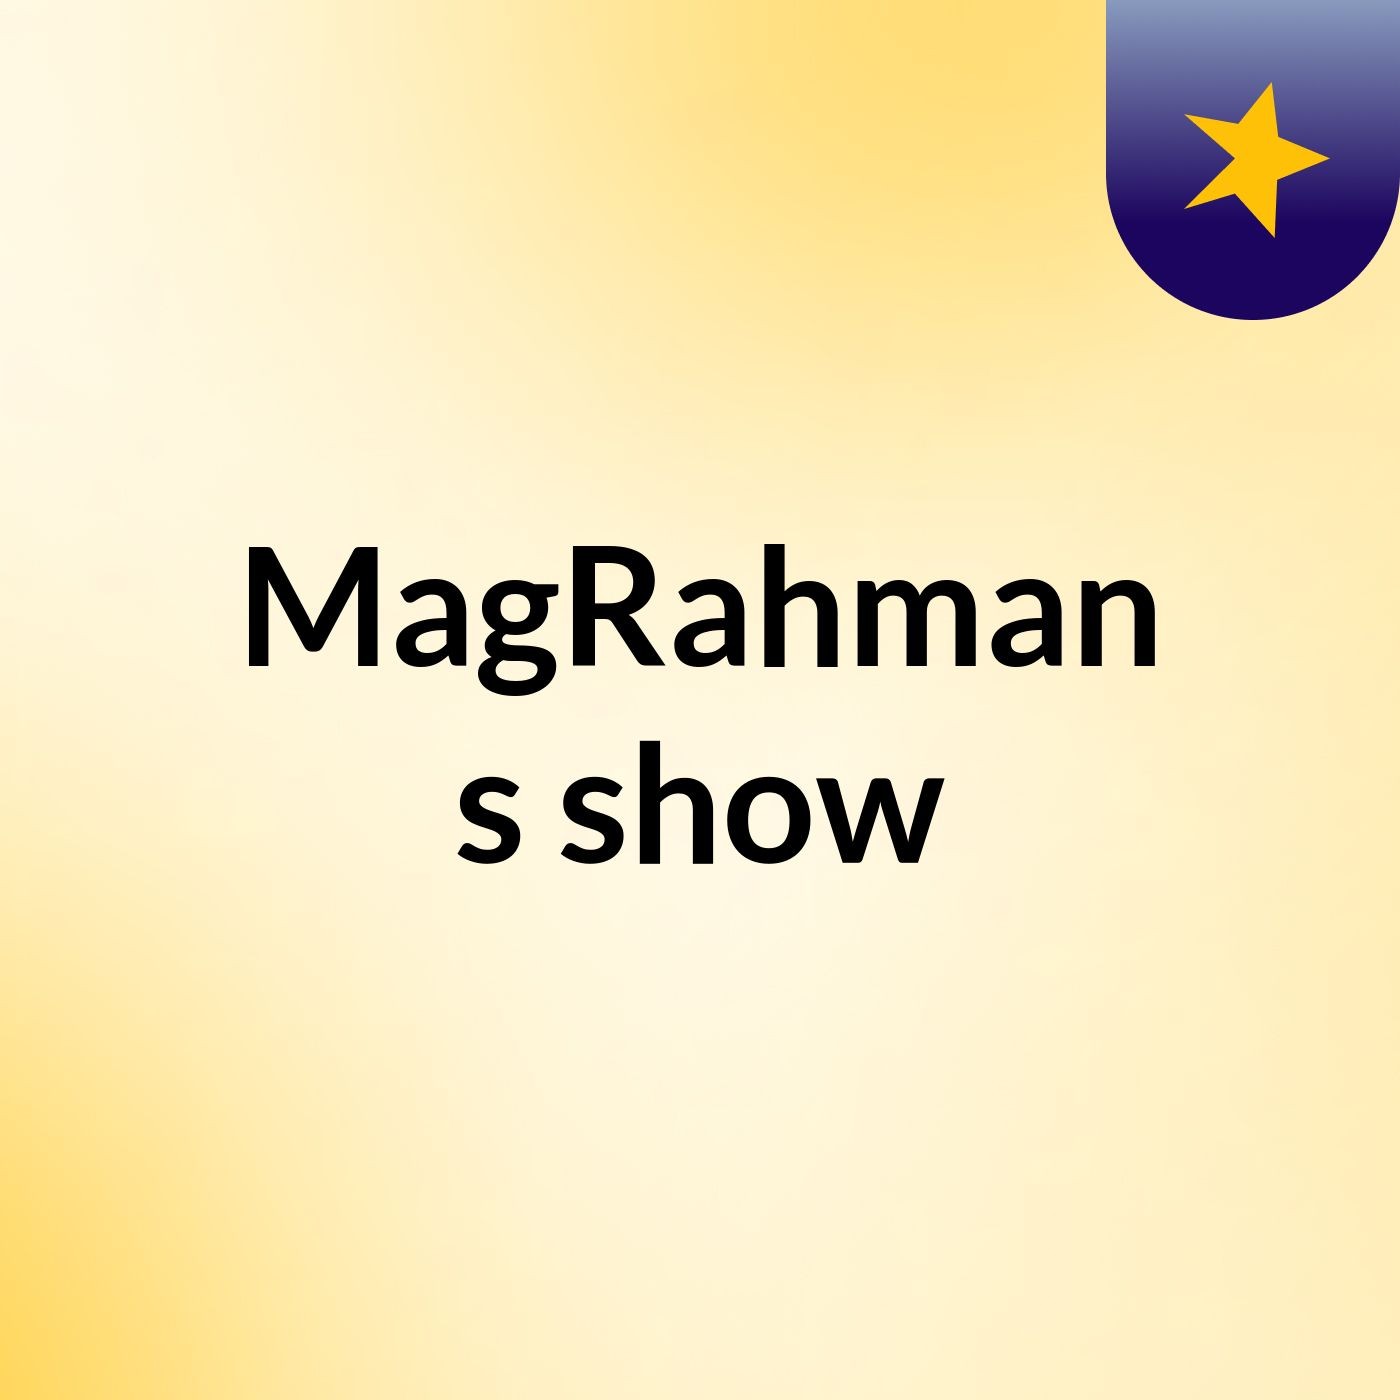 MagRahman's show